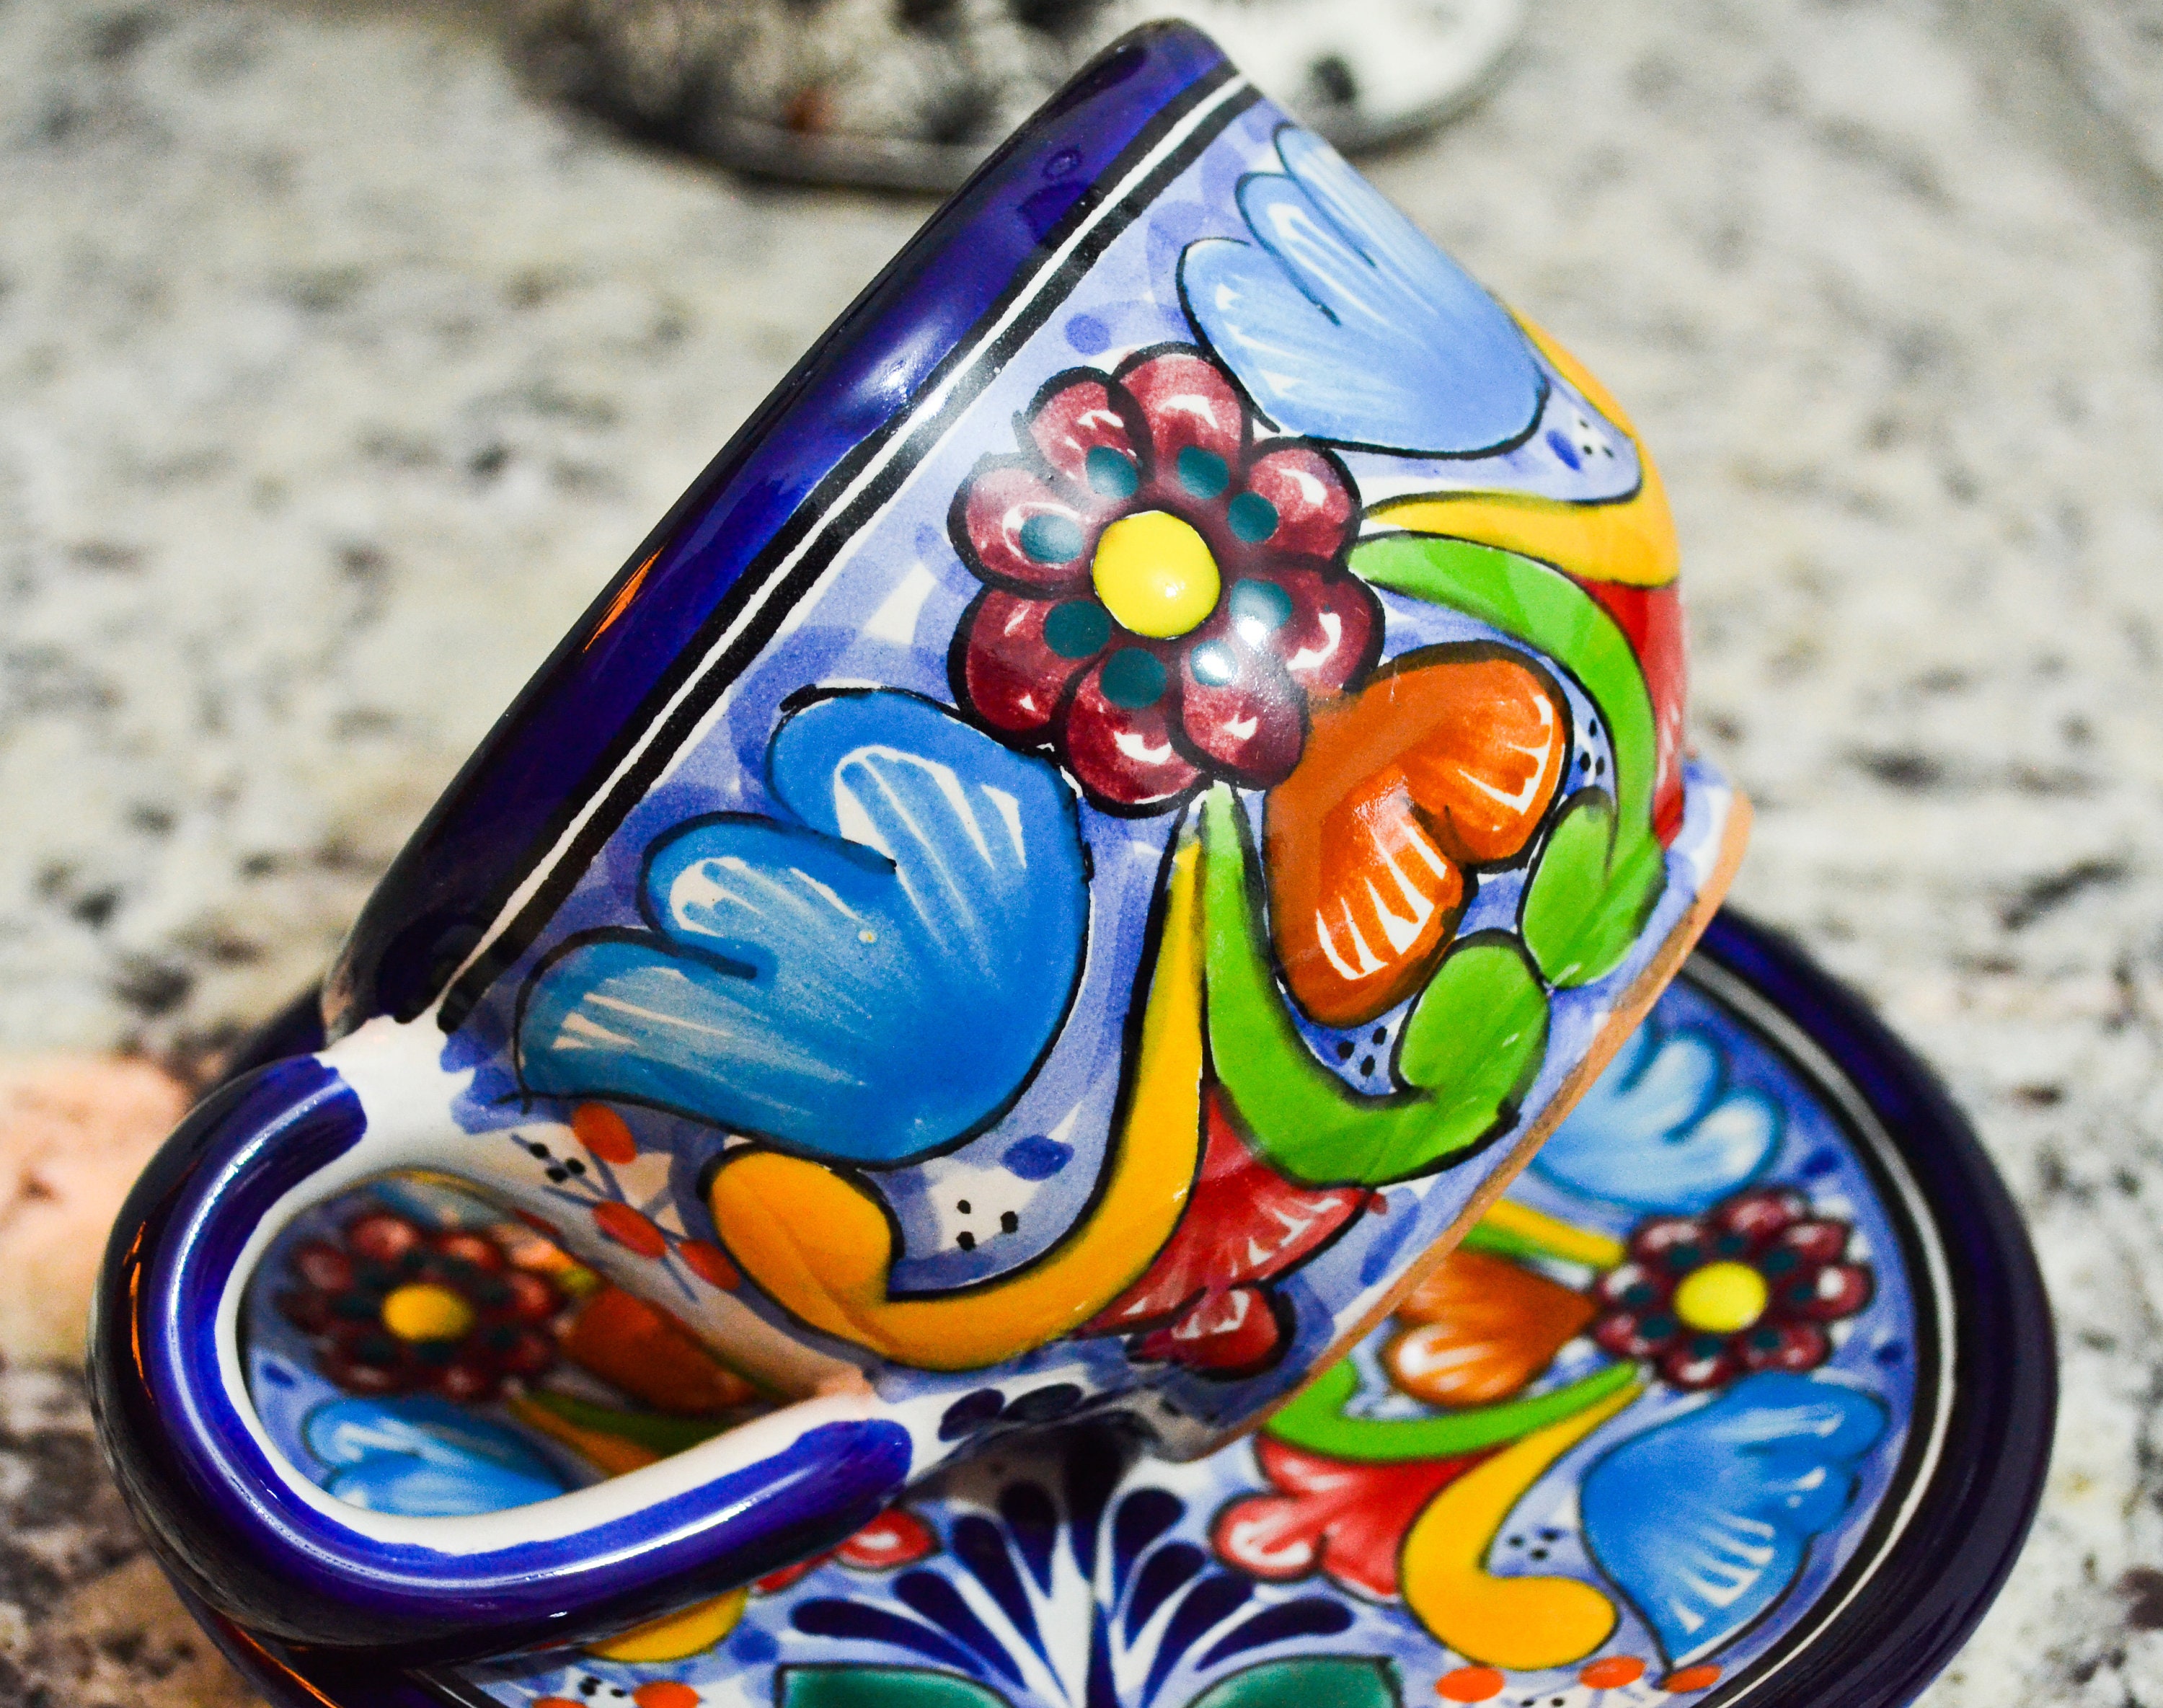 Mexican Talavera Coffee Mug - Cobalt – Zinnia Folk Arts